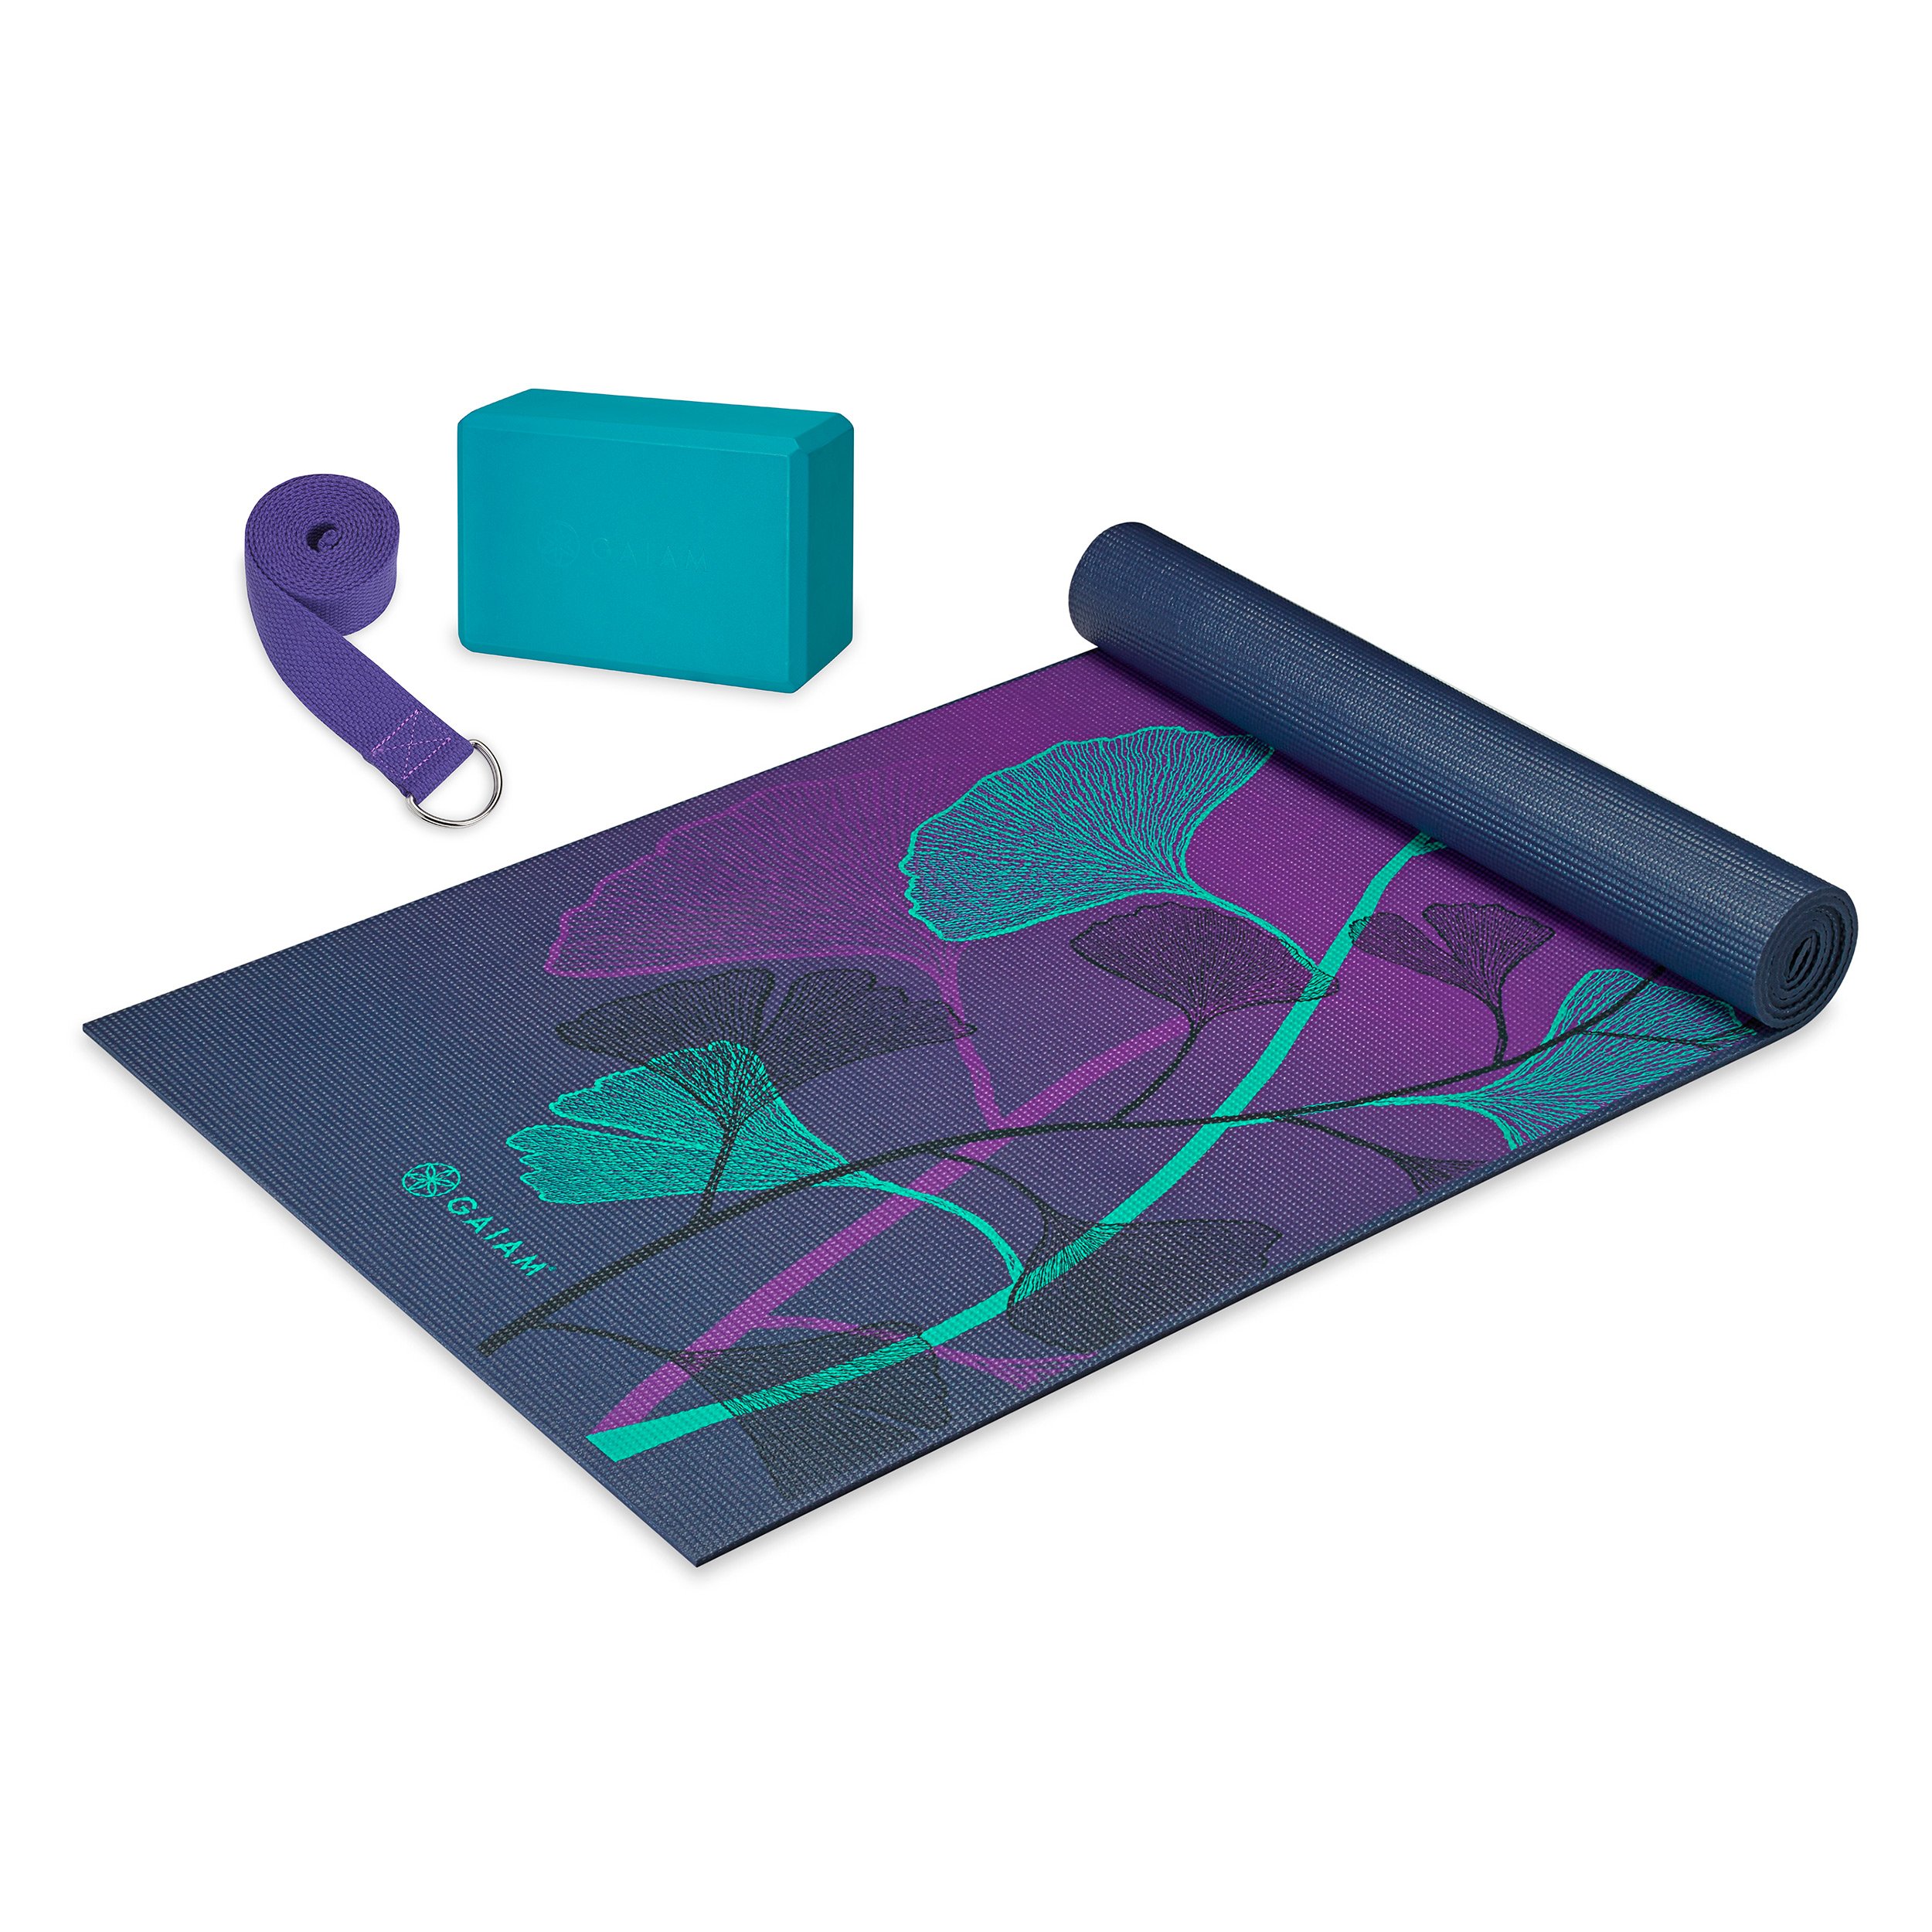 Gaiam Beginner's Yoga Starter Kit Set (Yoga Mat, Yoga Block, Yoga